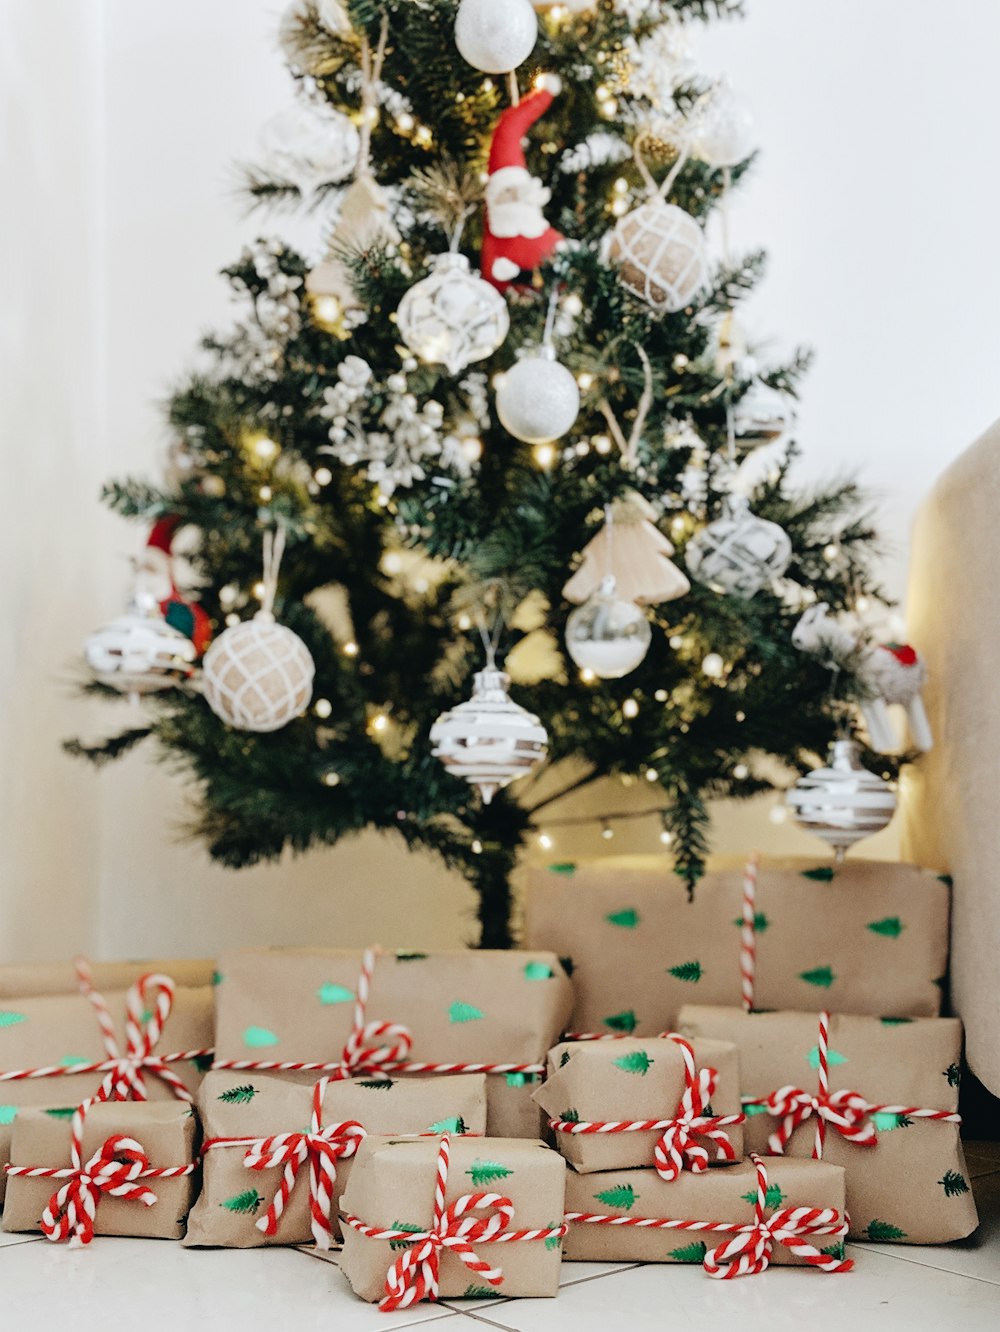 bundle of gifts near Christmas tree